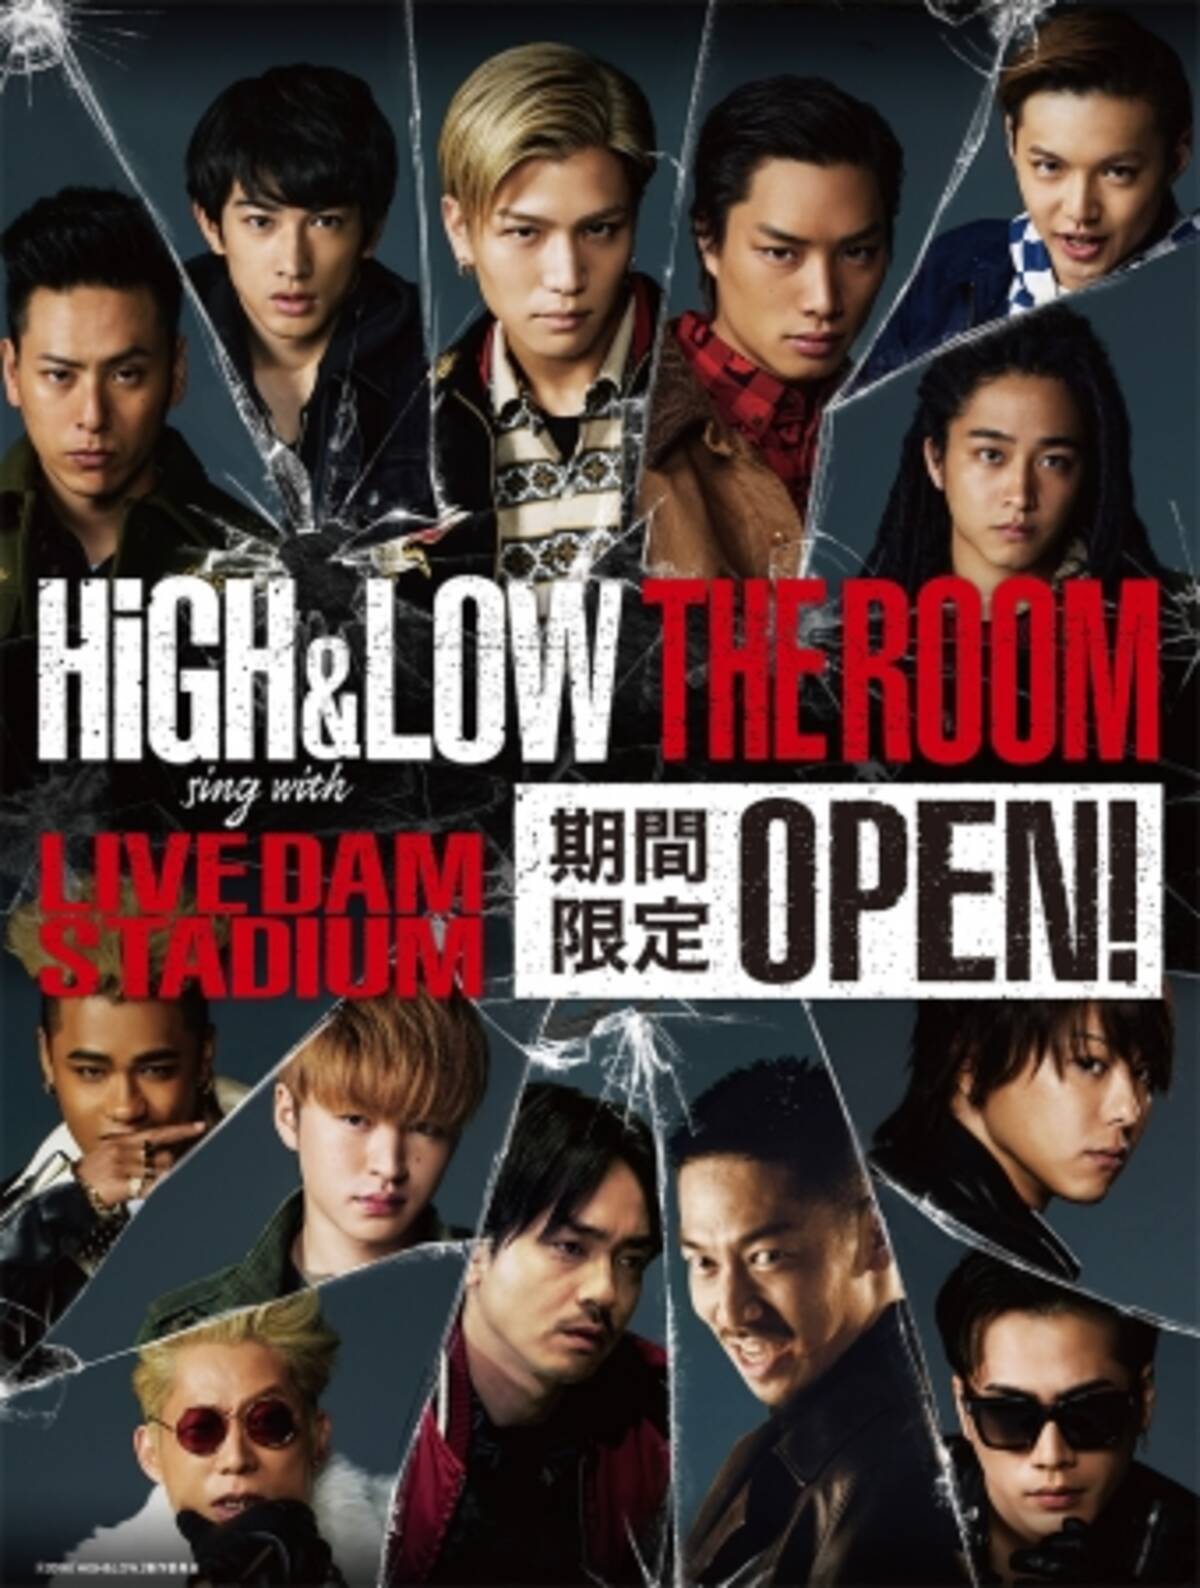 High Low The Room 誕生 Live Dam Stadium設置店24店舗で期間限定オープン 7 22 来年1 31 16年7月13日 エキサイトニュース 2 4